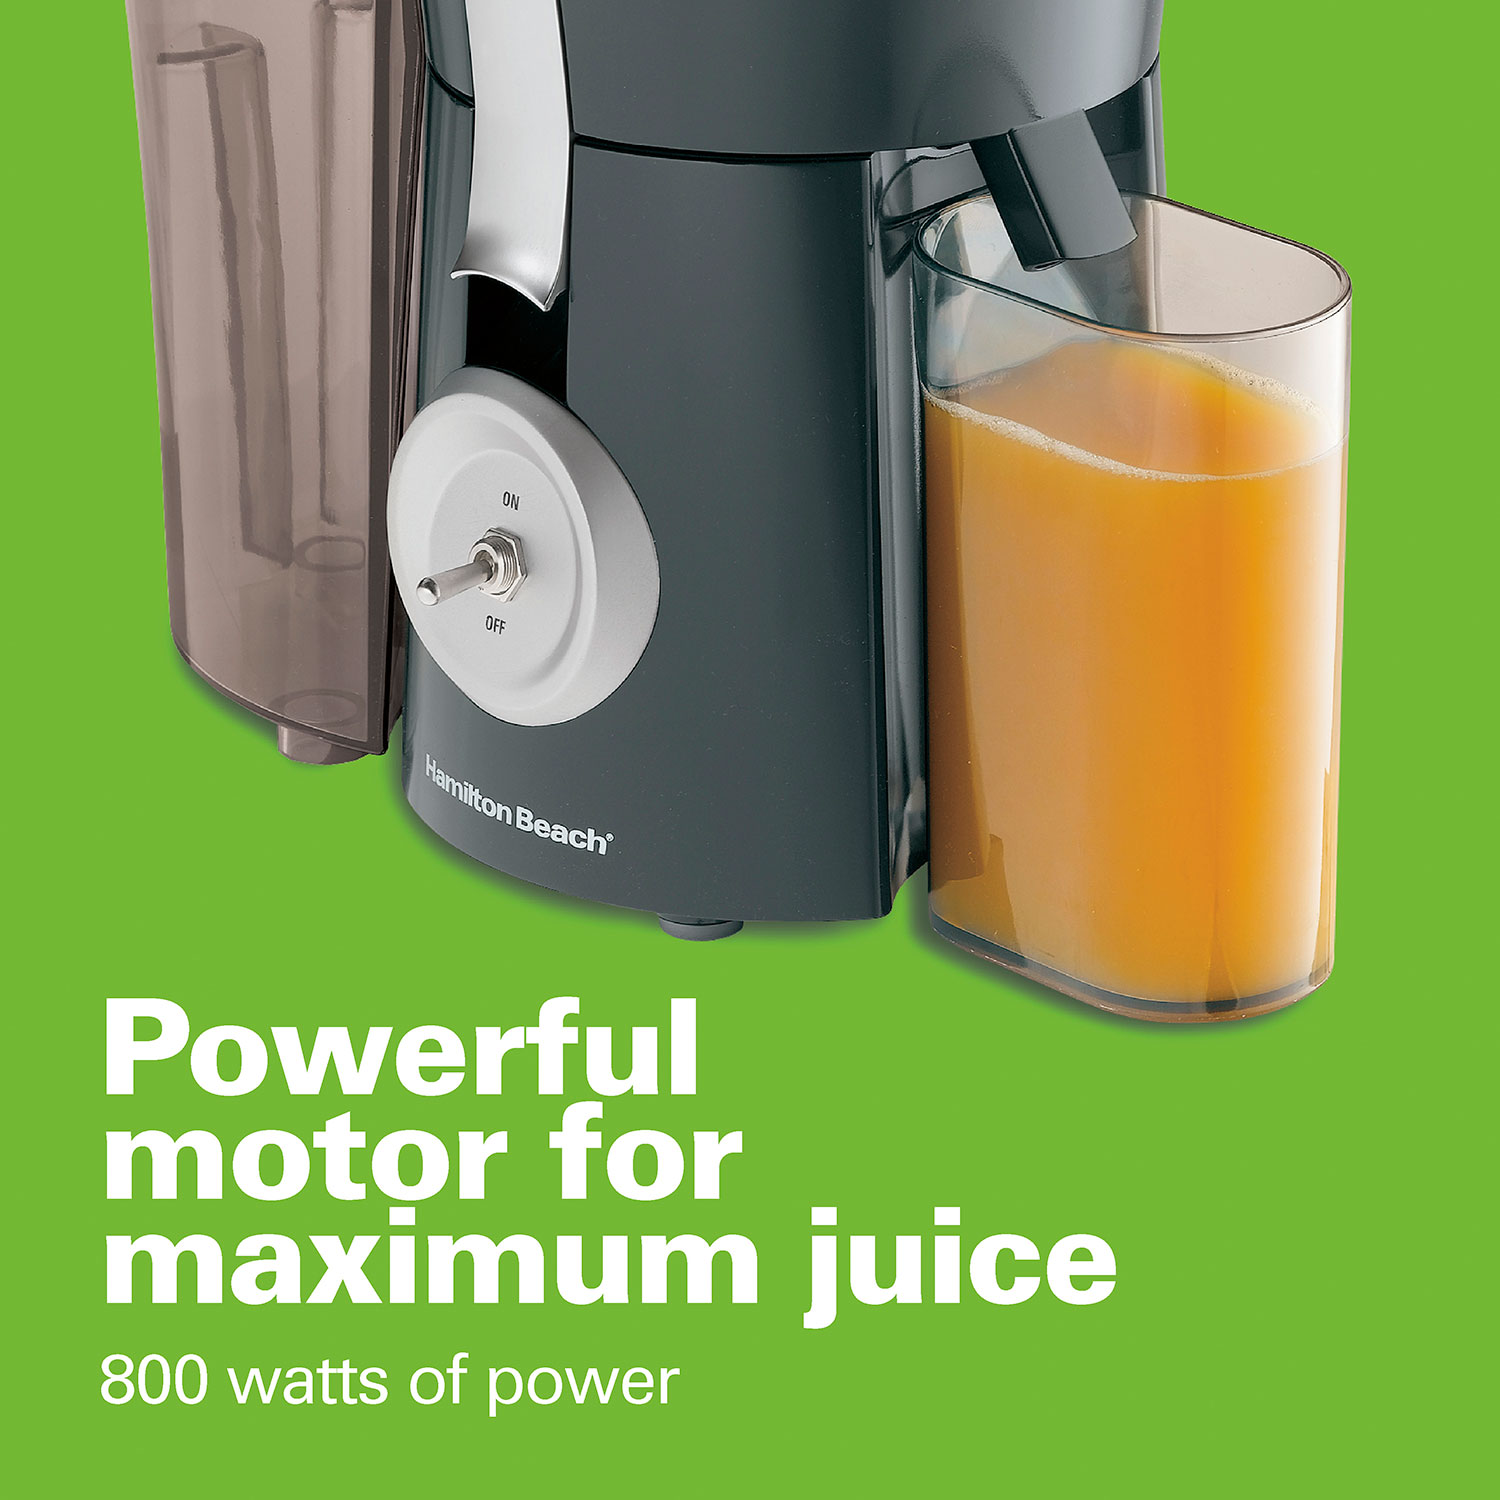 Hamilton Beach Big Mouth Pro Juicer Juice Extractor, 800W, BPA Free,  Powerful Motor, Gray, 67650